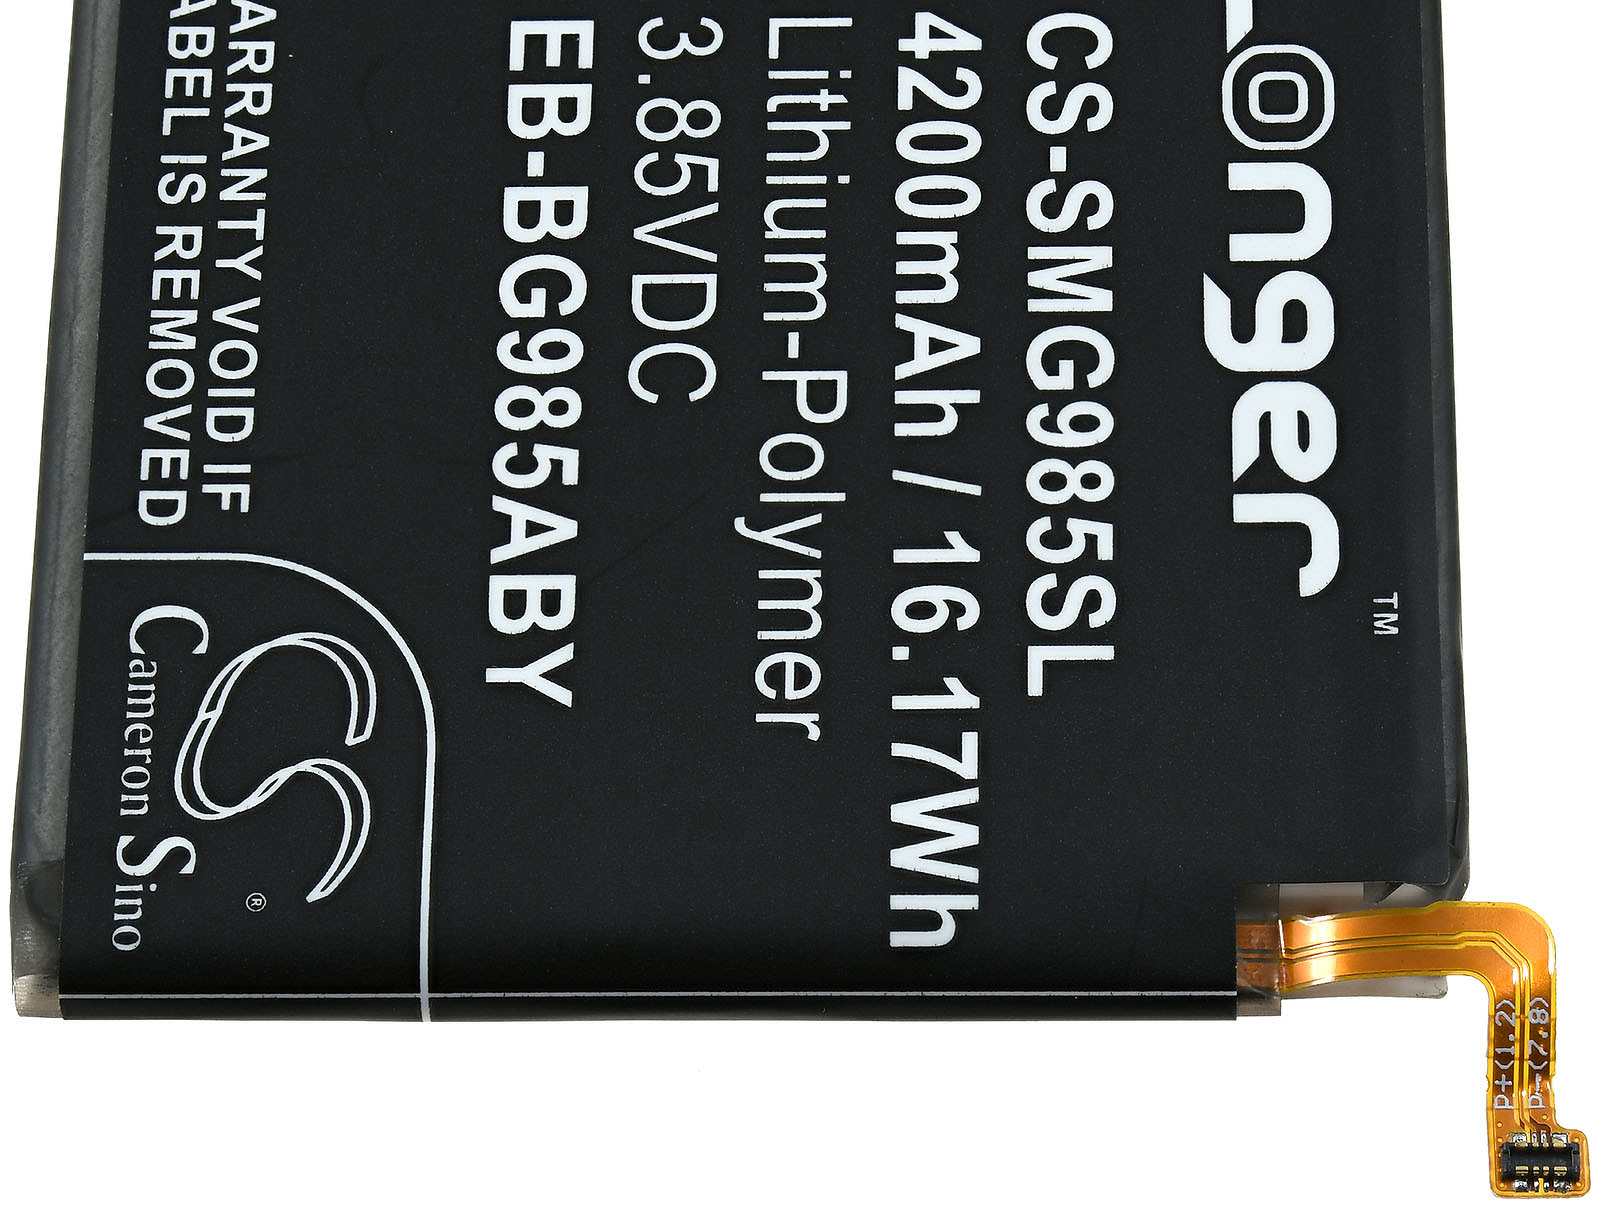 SM-G986B Volt, Li-Polymer für POWERY 3.85 Akku, Samsung Akku 4200mAh